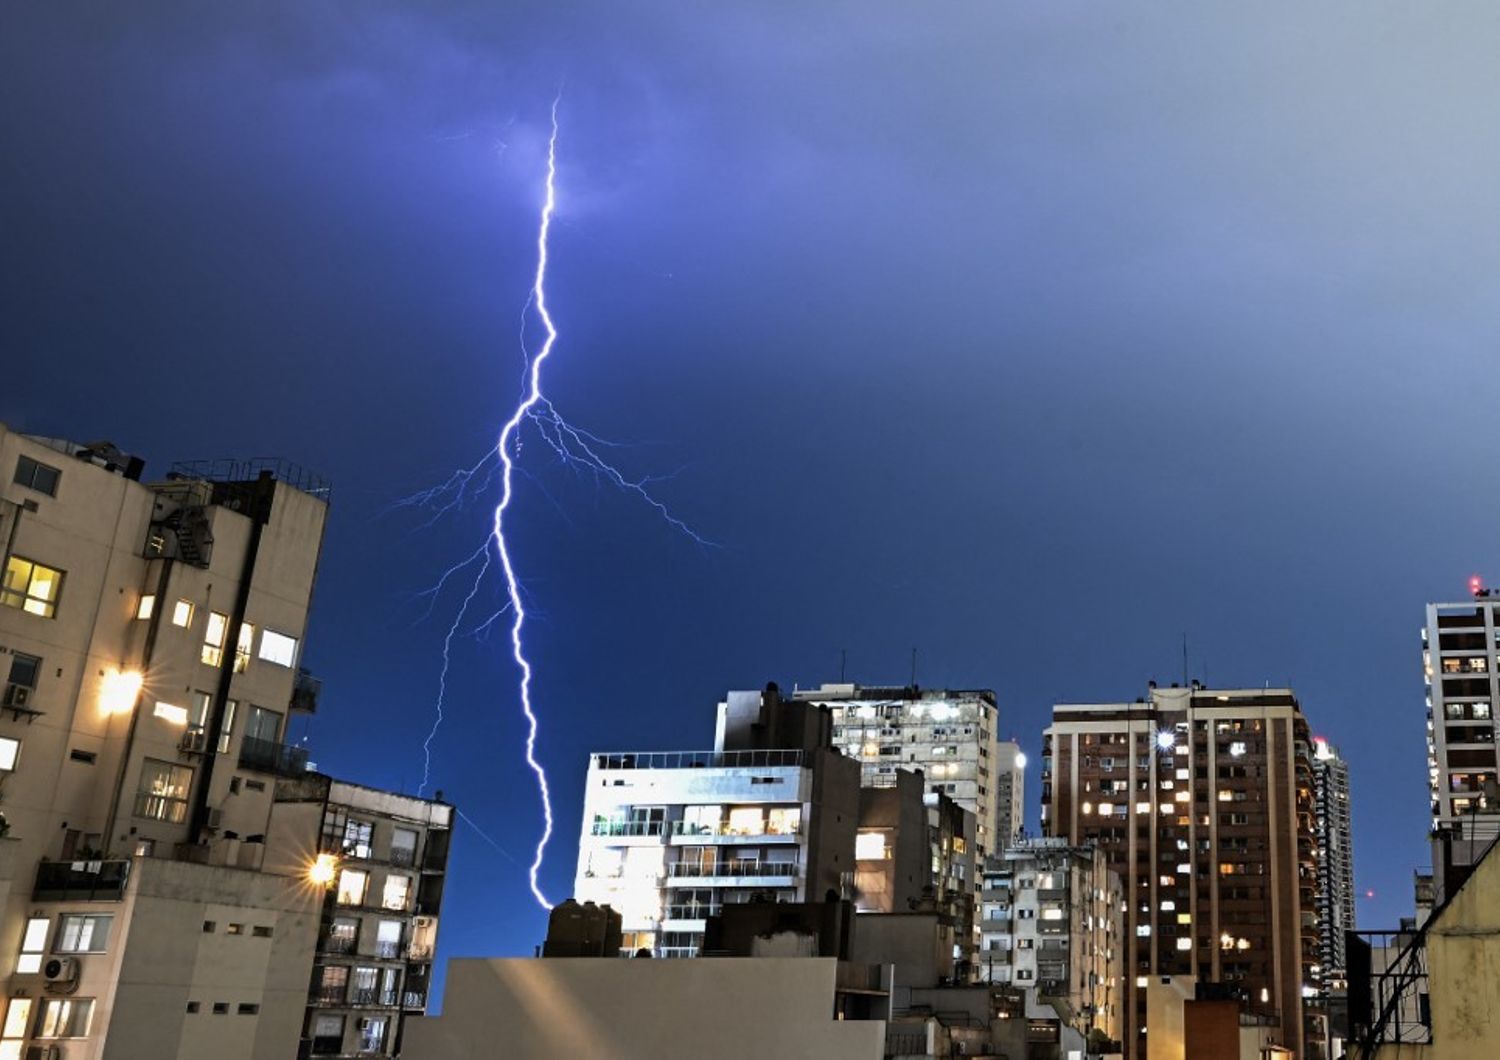 Un fulmine colpisce la citt&agrave; di Buenos Aires durante un temporale&nbsp;